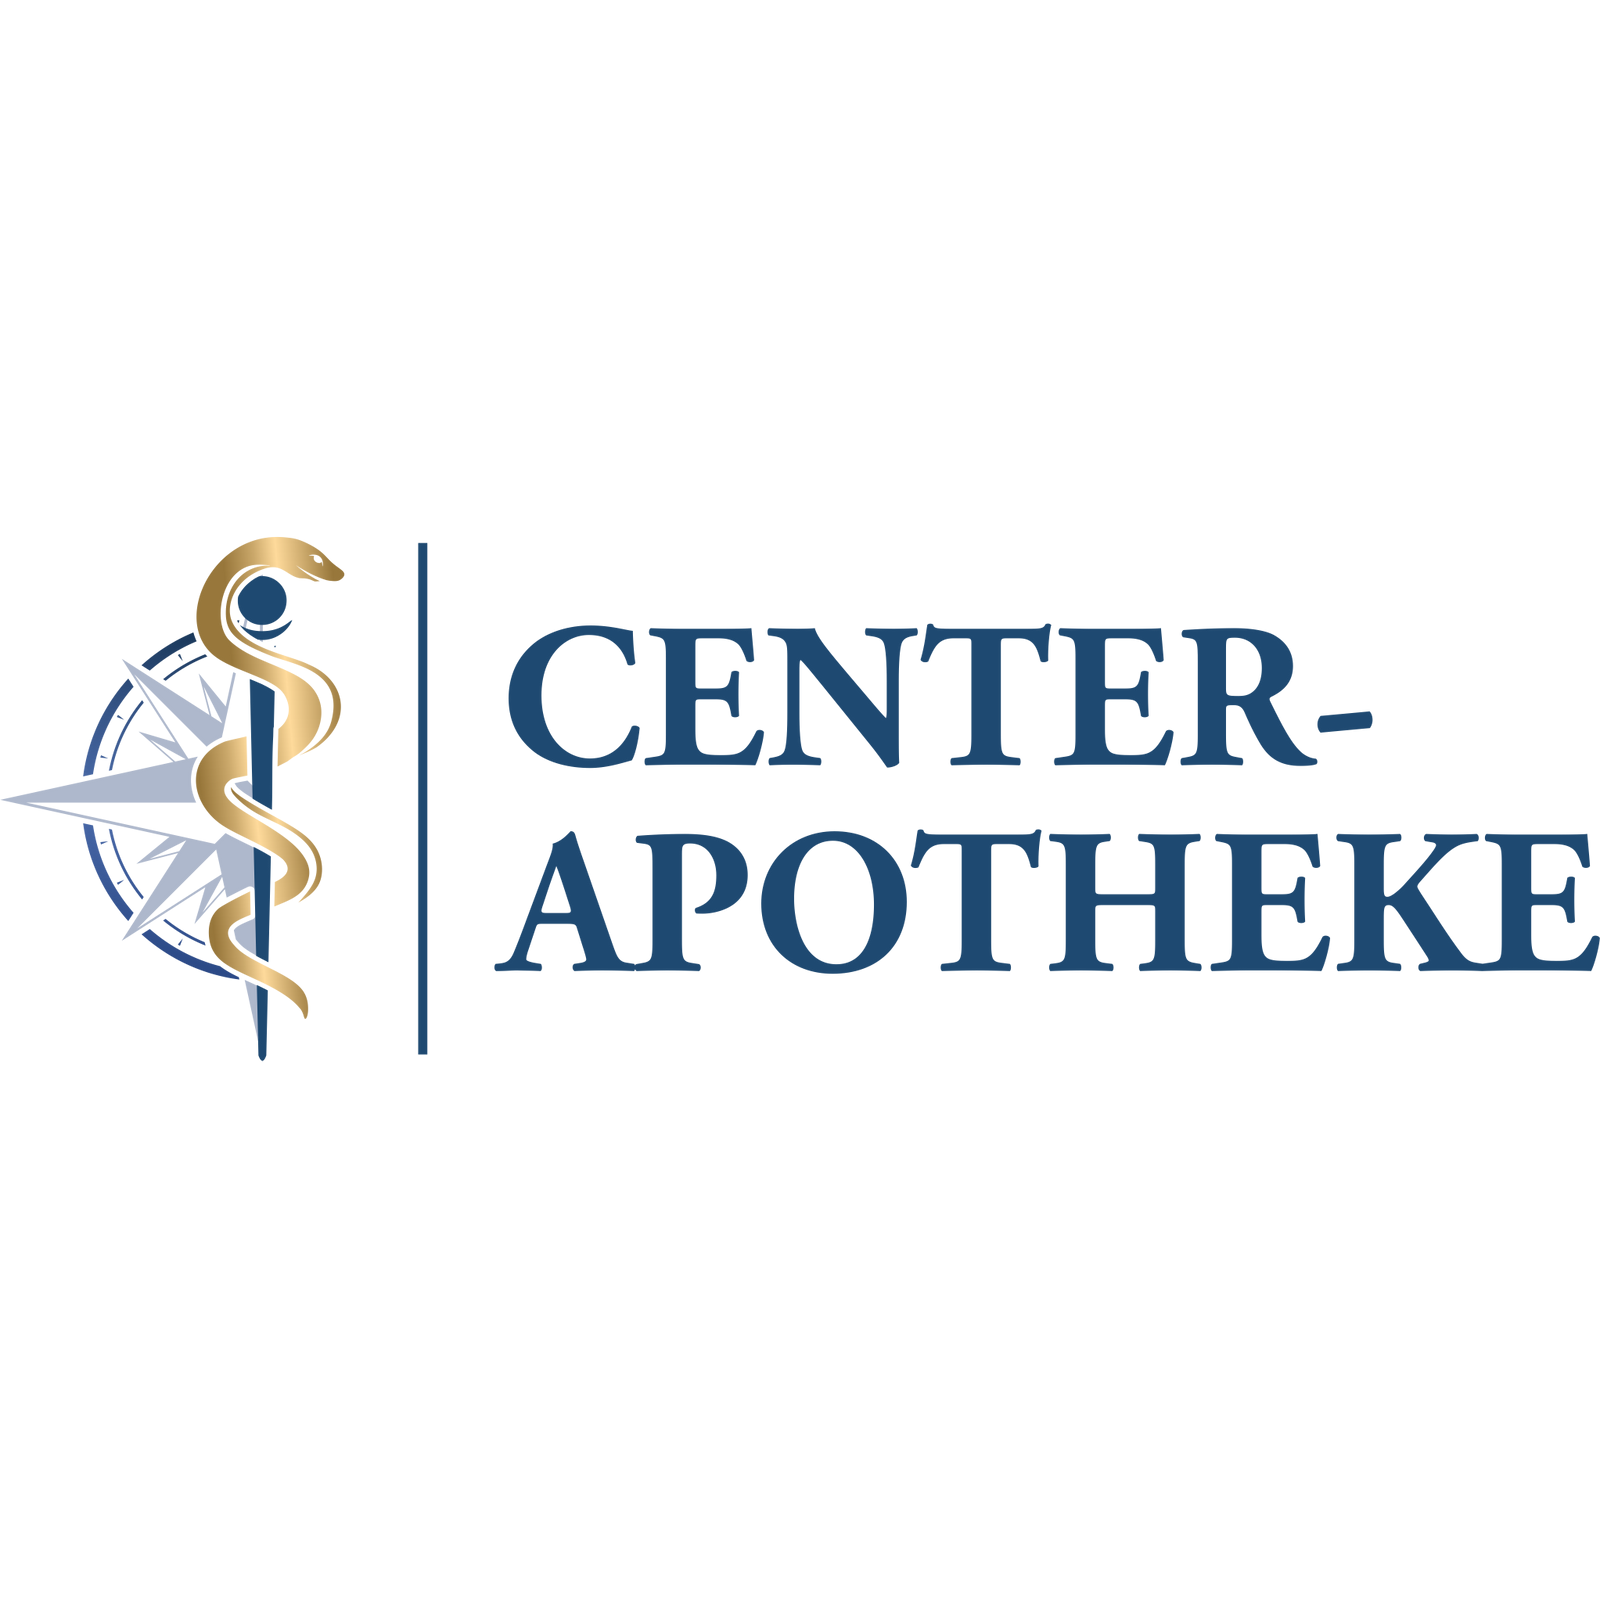 Center-Apotheke Logo